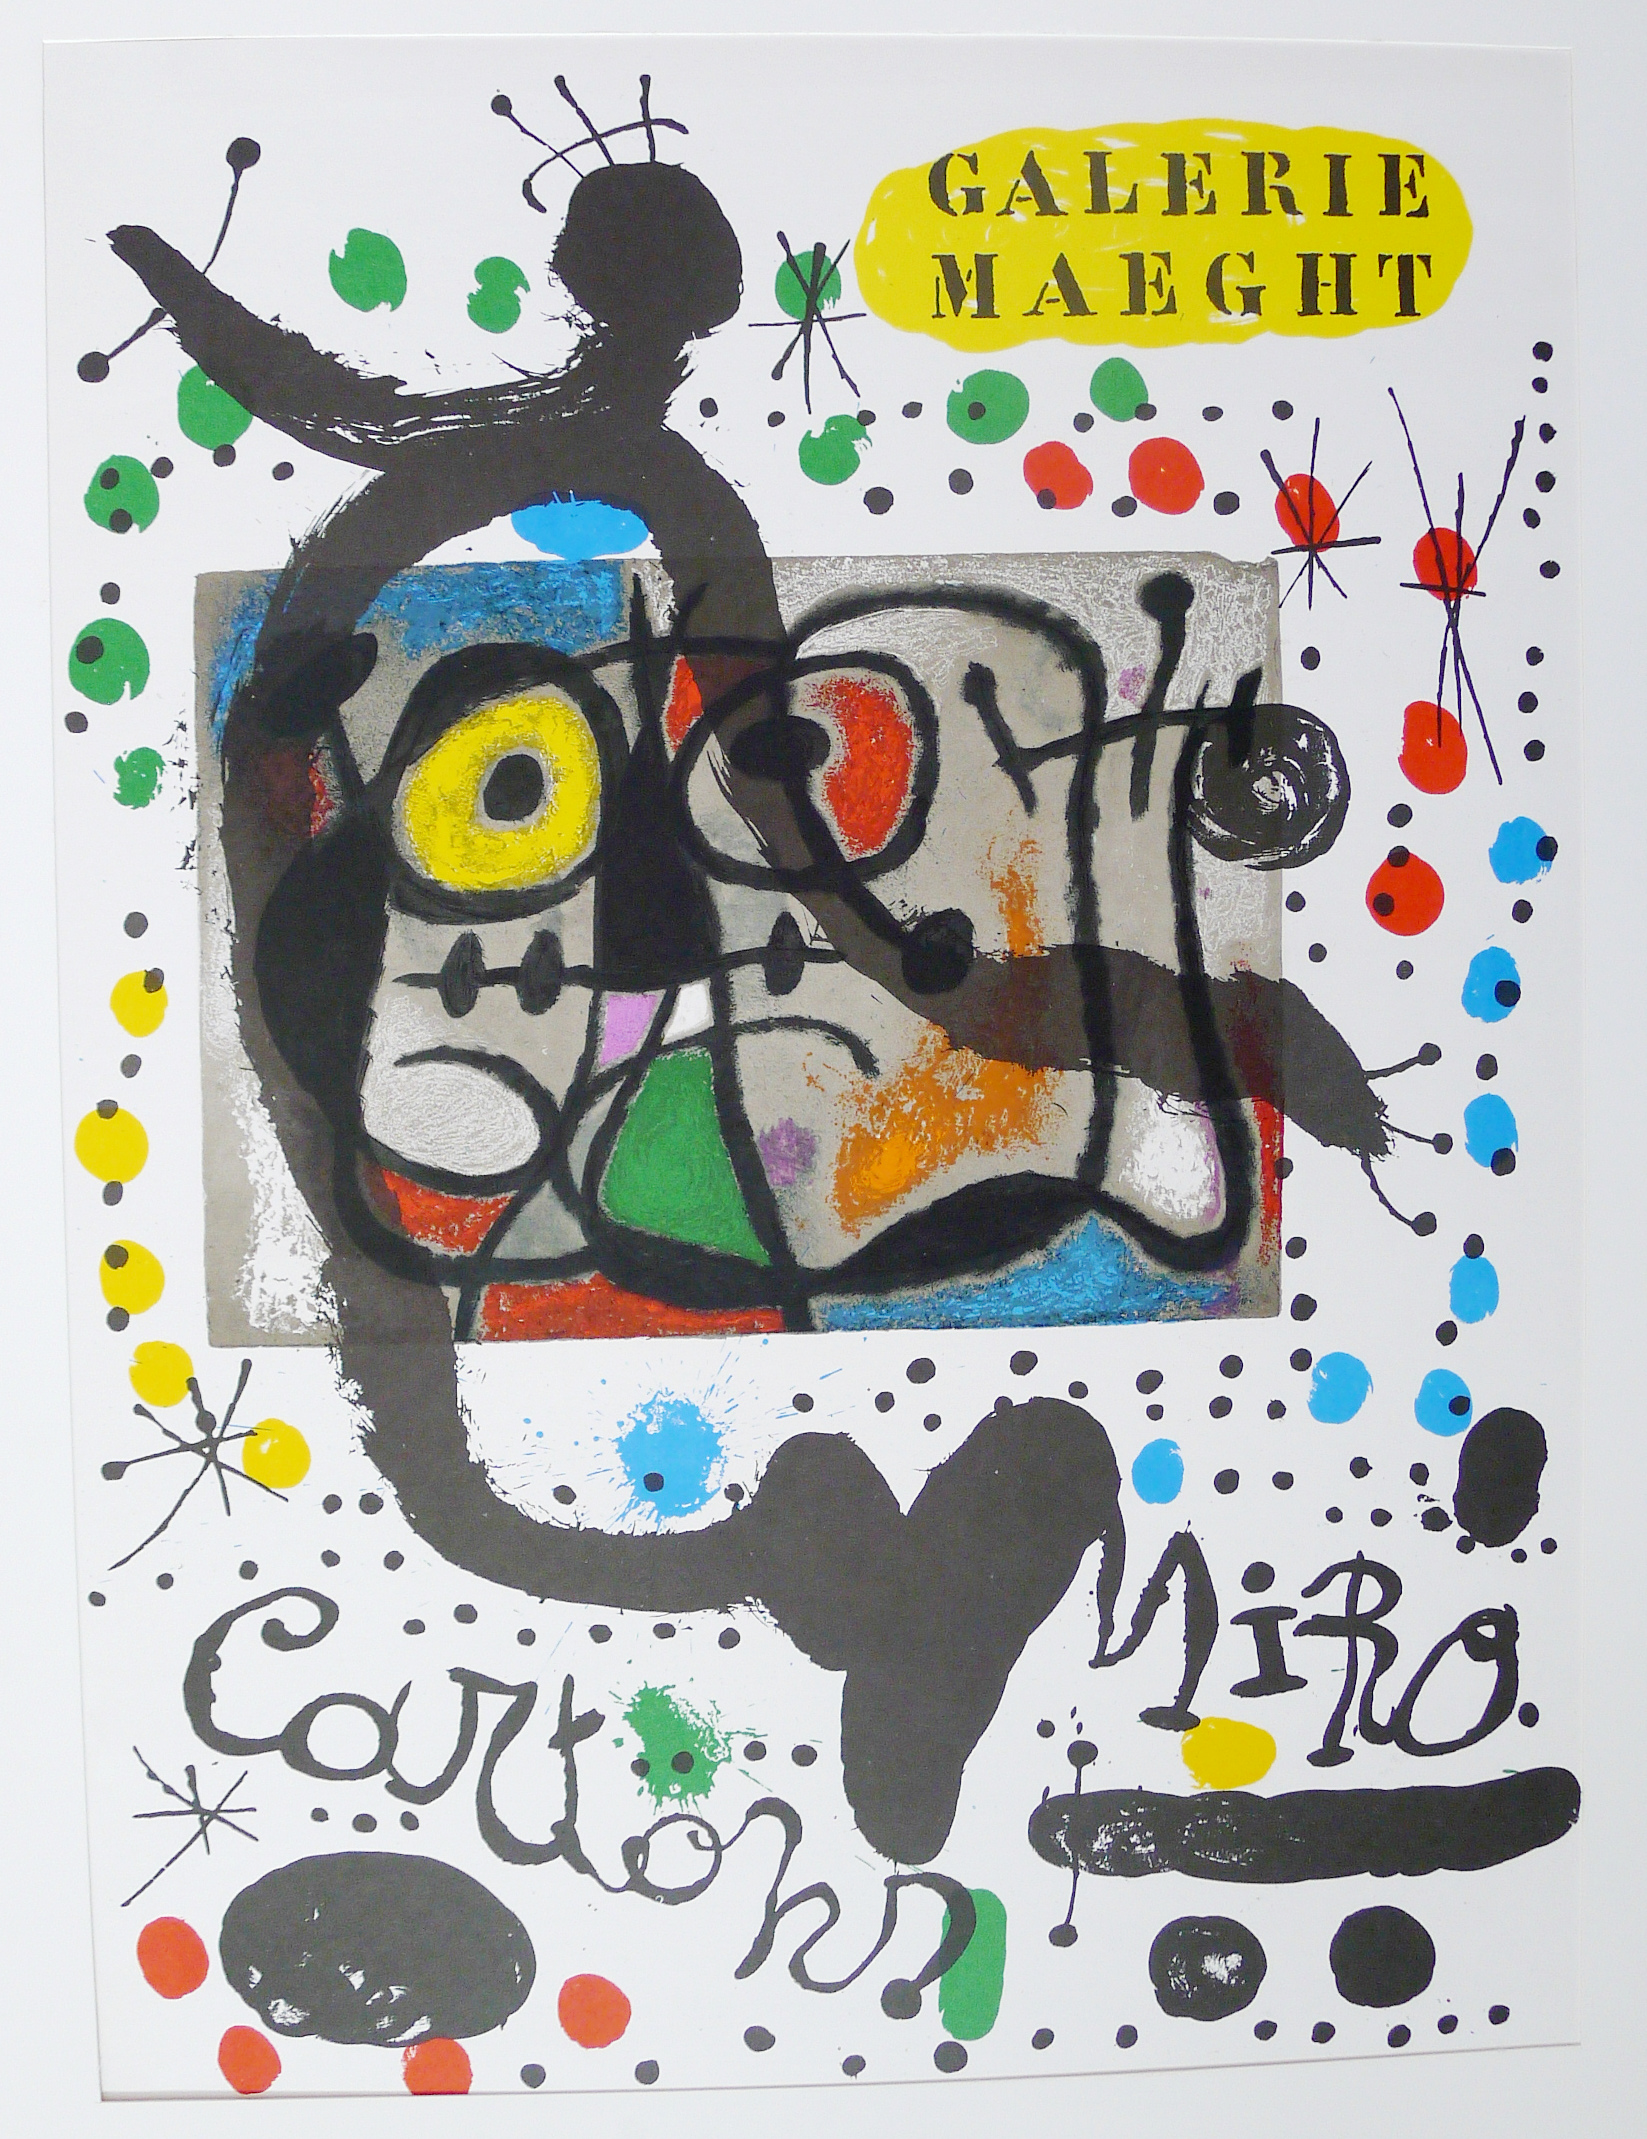 Joan Miro Art Details about  / Joan Miro Exhibition Poster Miro Exhibition Print Miro Poster